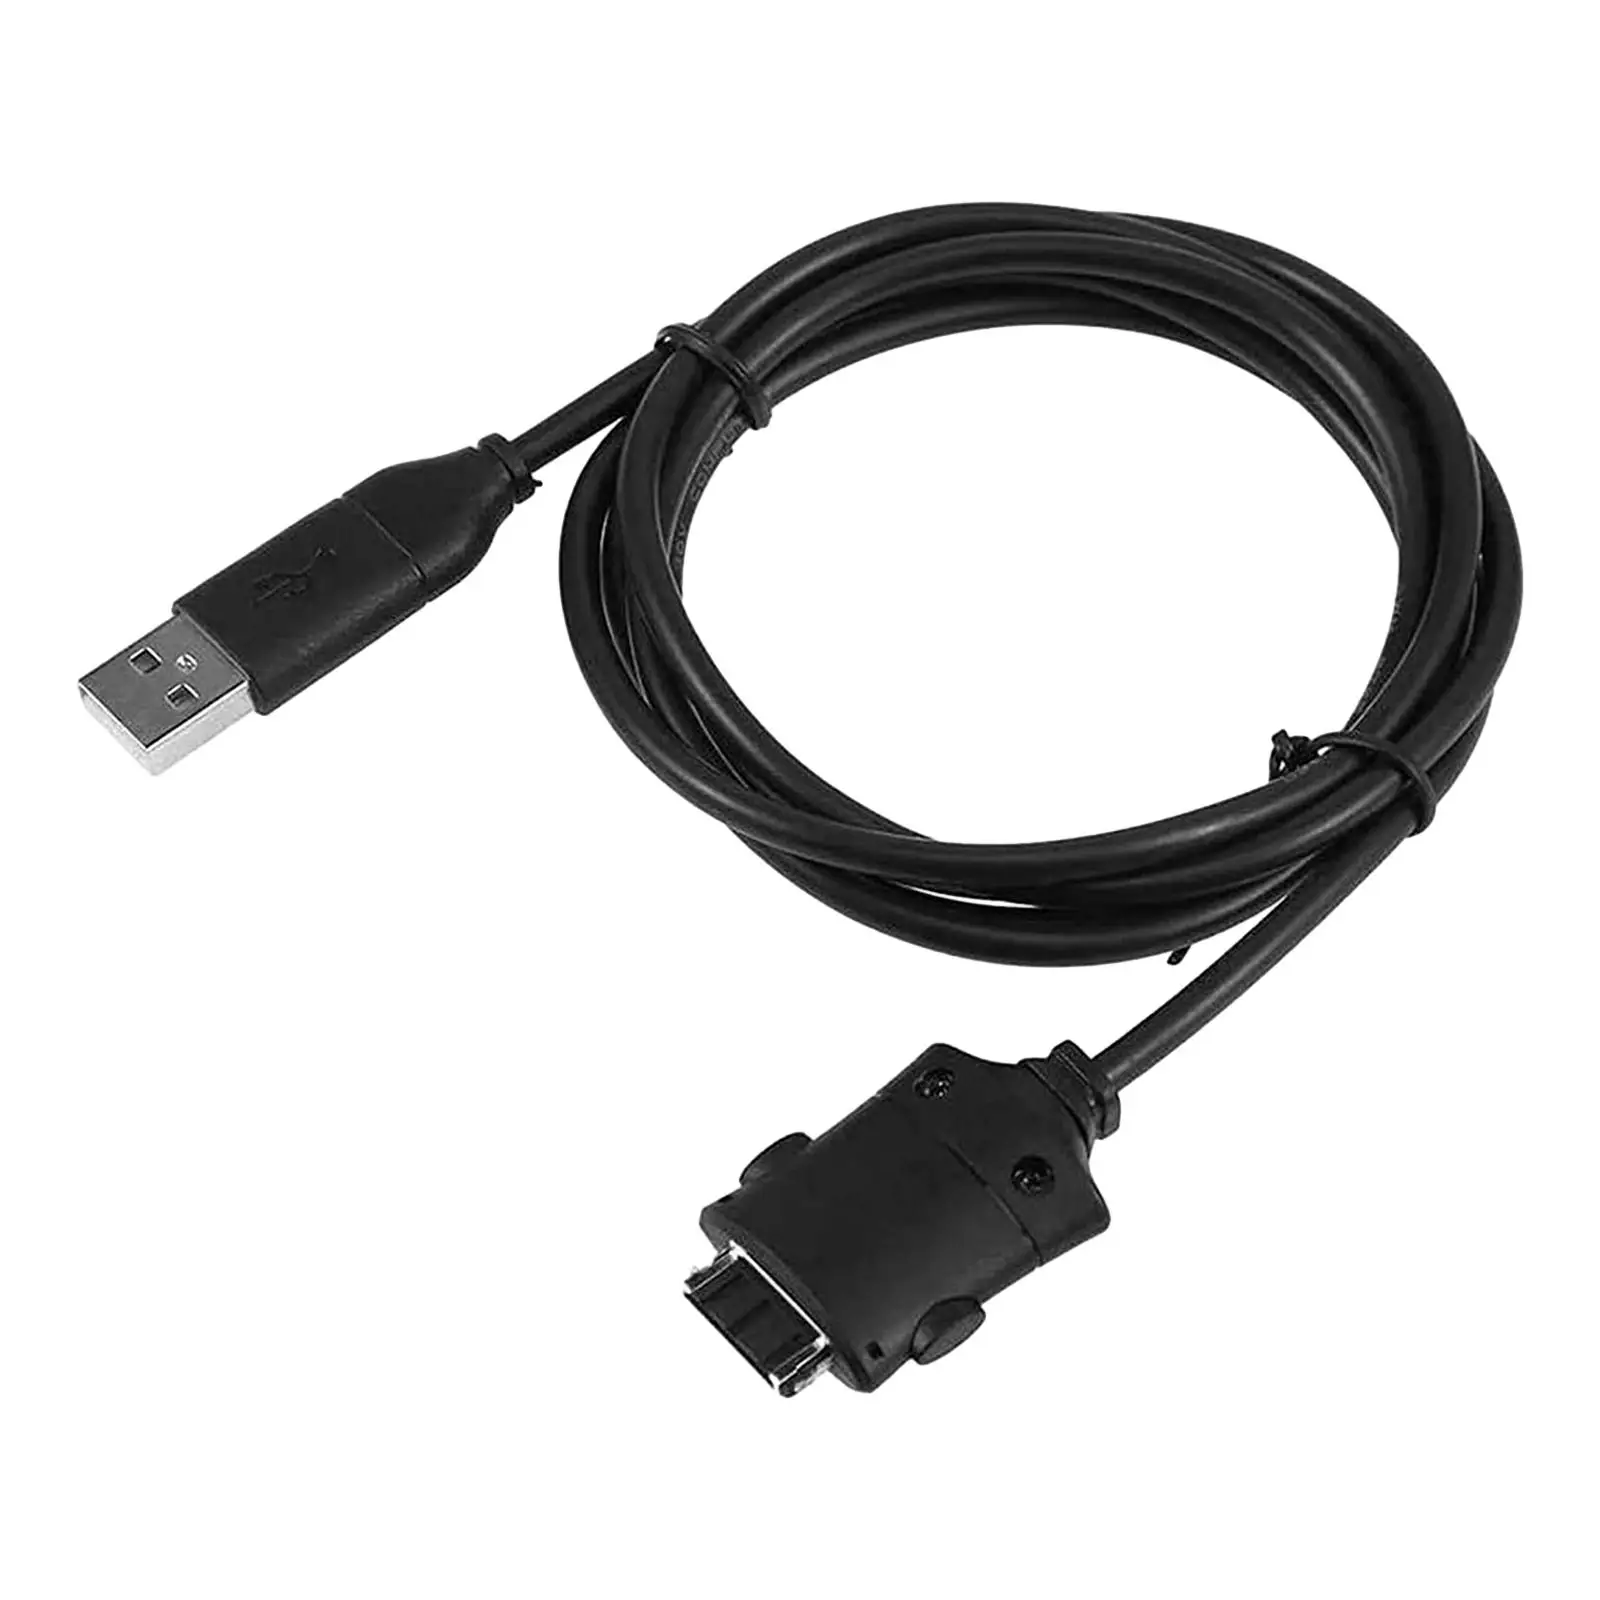 Suc-c2 USB Data Charging Cable Cord Professional Spare Parts Accessory Durable 1.5M Black for Digital Camera L830 U-ca5 Nv5 Nv20